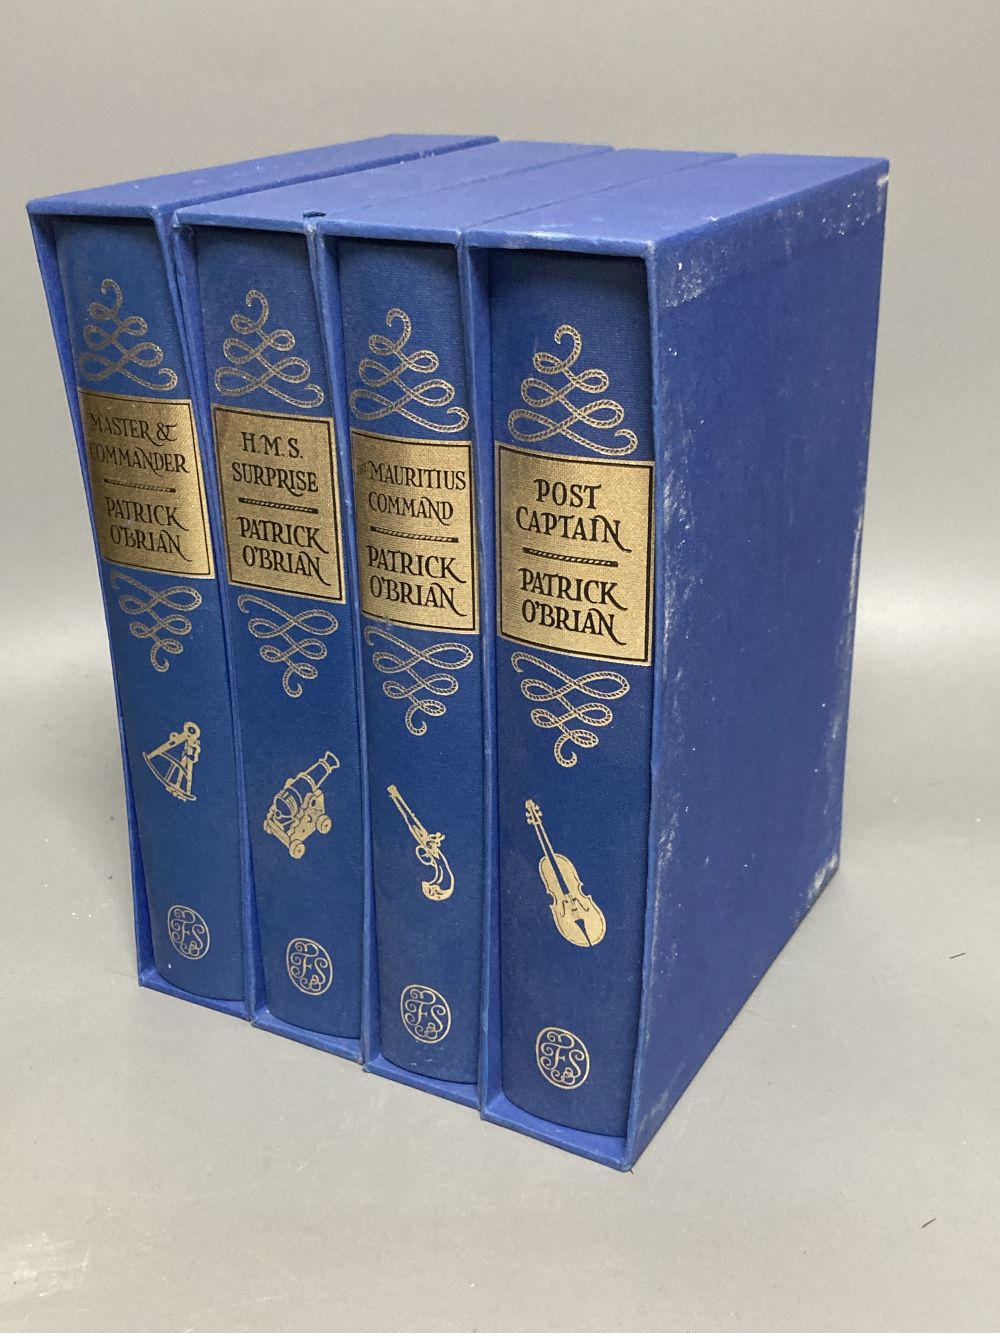 OBrian, Patrick - Hornblower Works, 4 vols, publ. The Folio Society, quarto